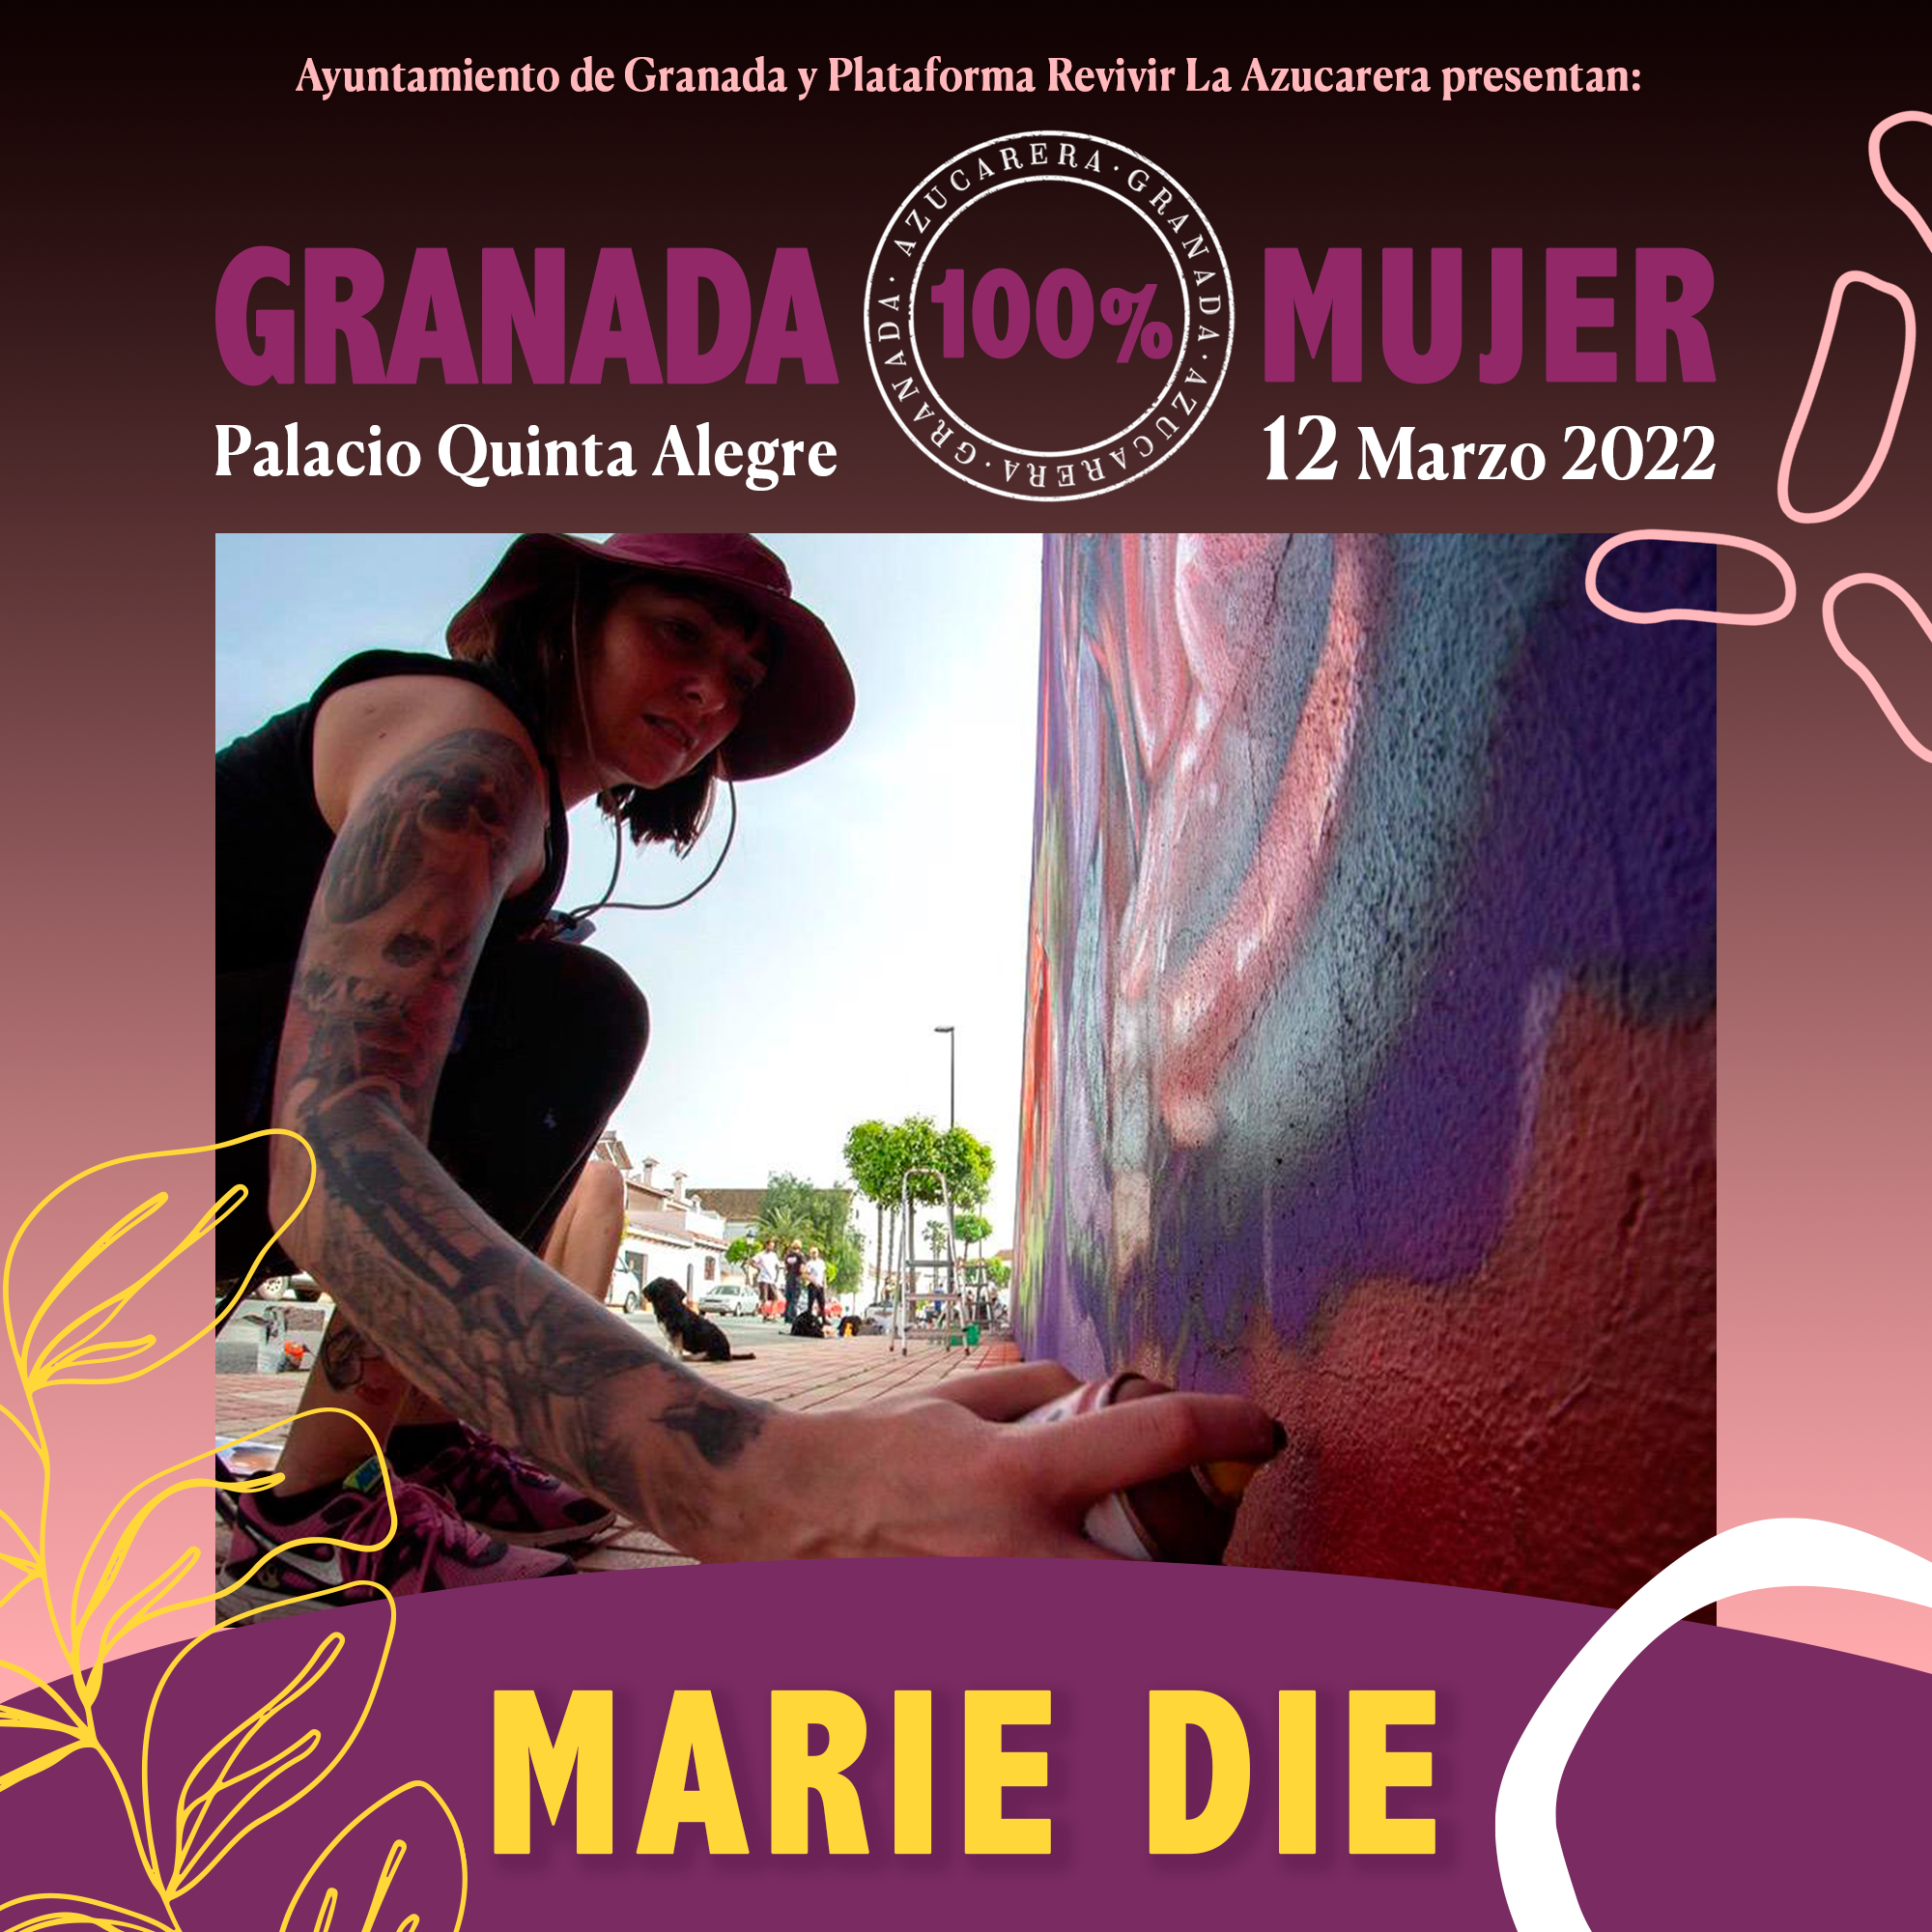 Marie die grafitera Festival Granada 100% mujer